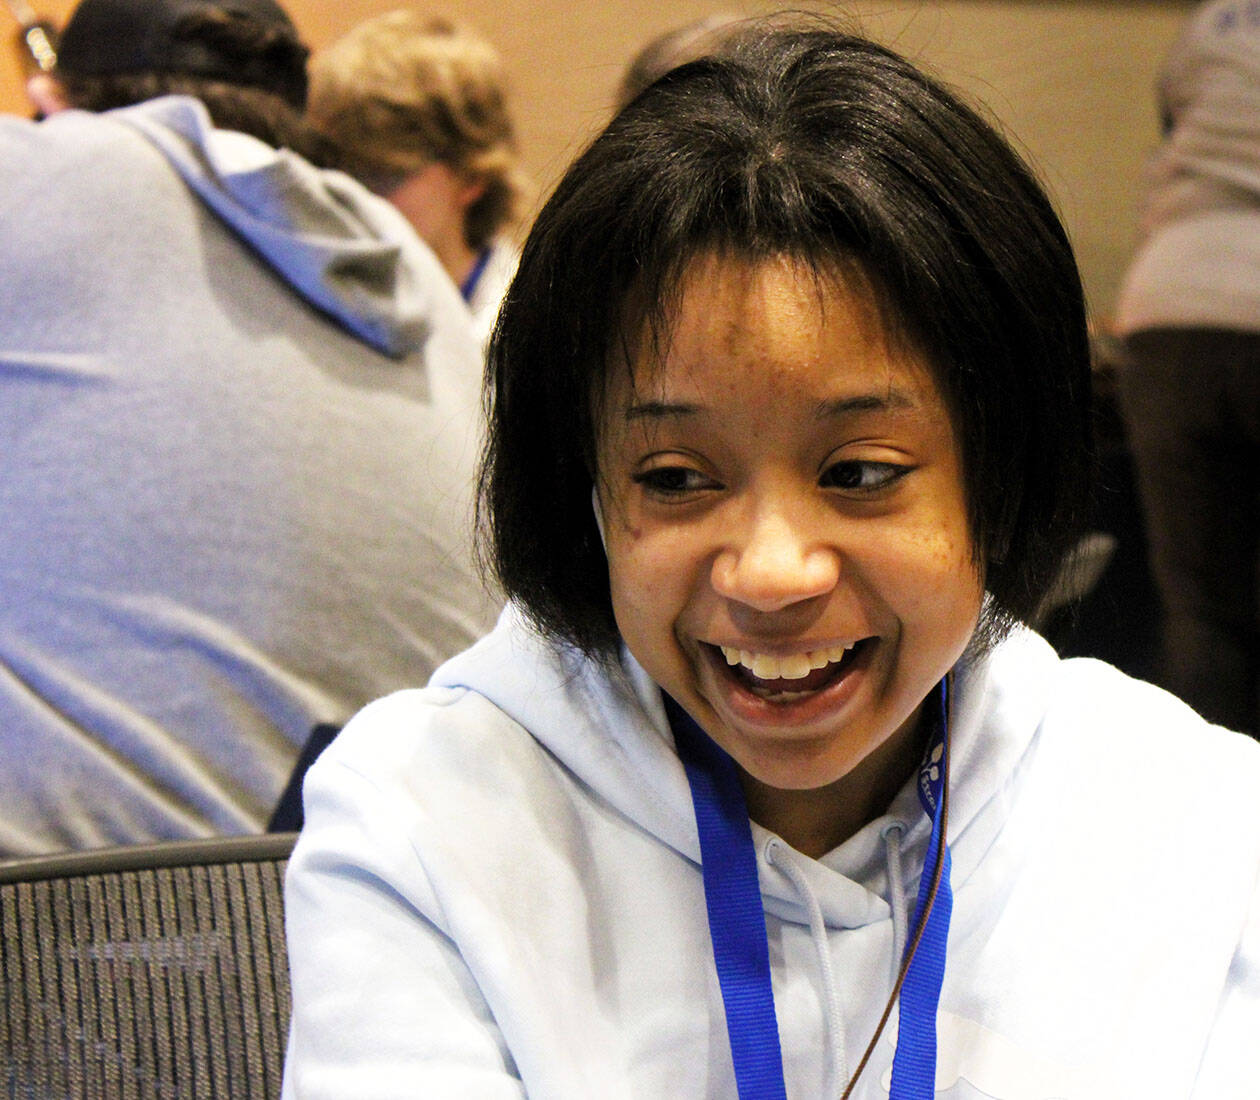 Elisha Meyer/Kitsap News Group photos
Mihelia Thomas, 16, shares a smile with her sister during a tabletop game.